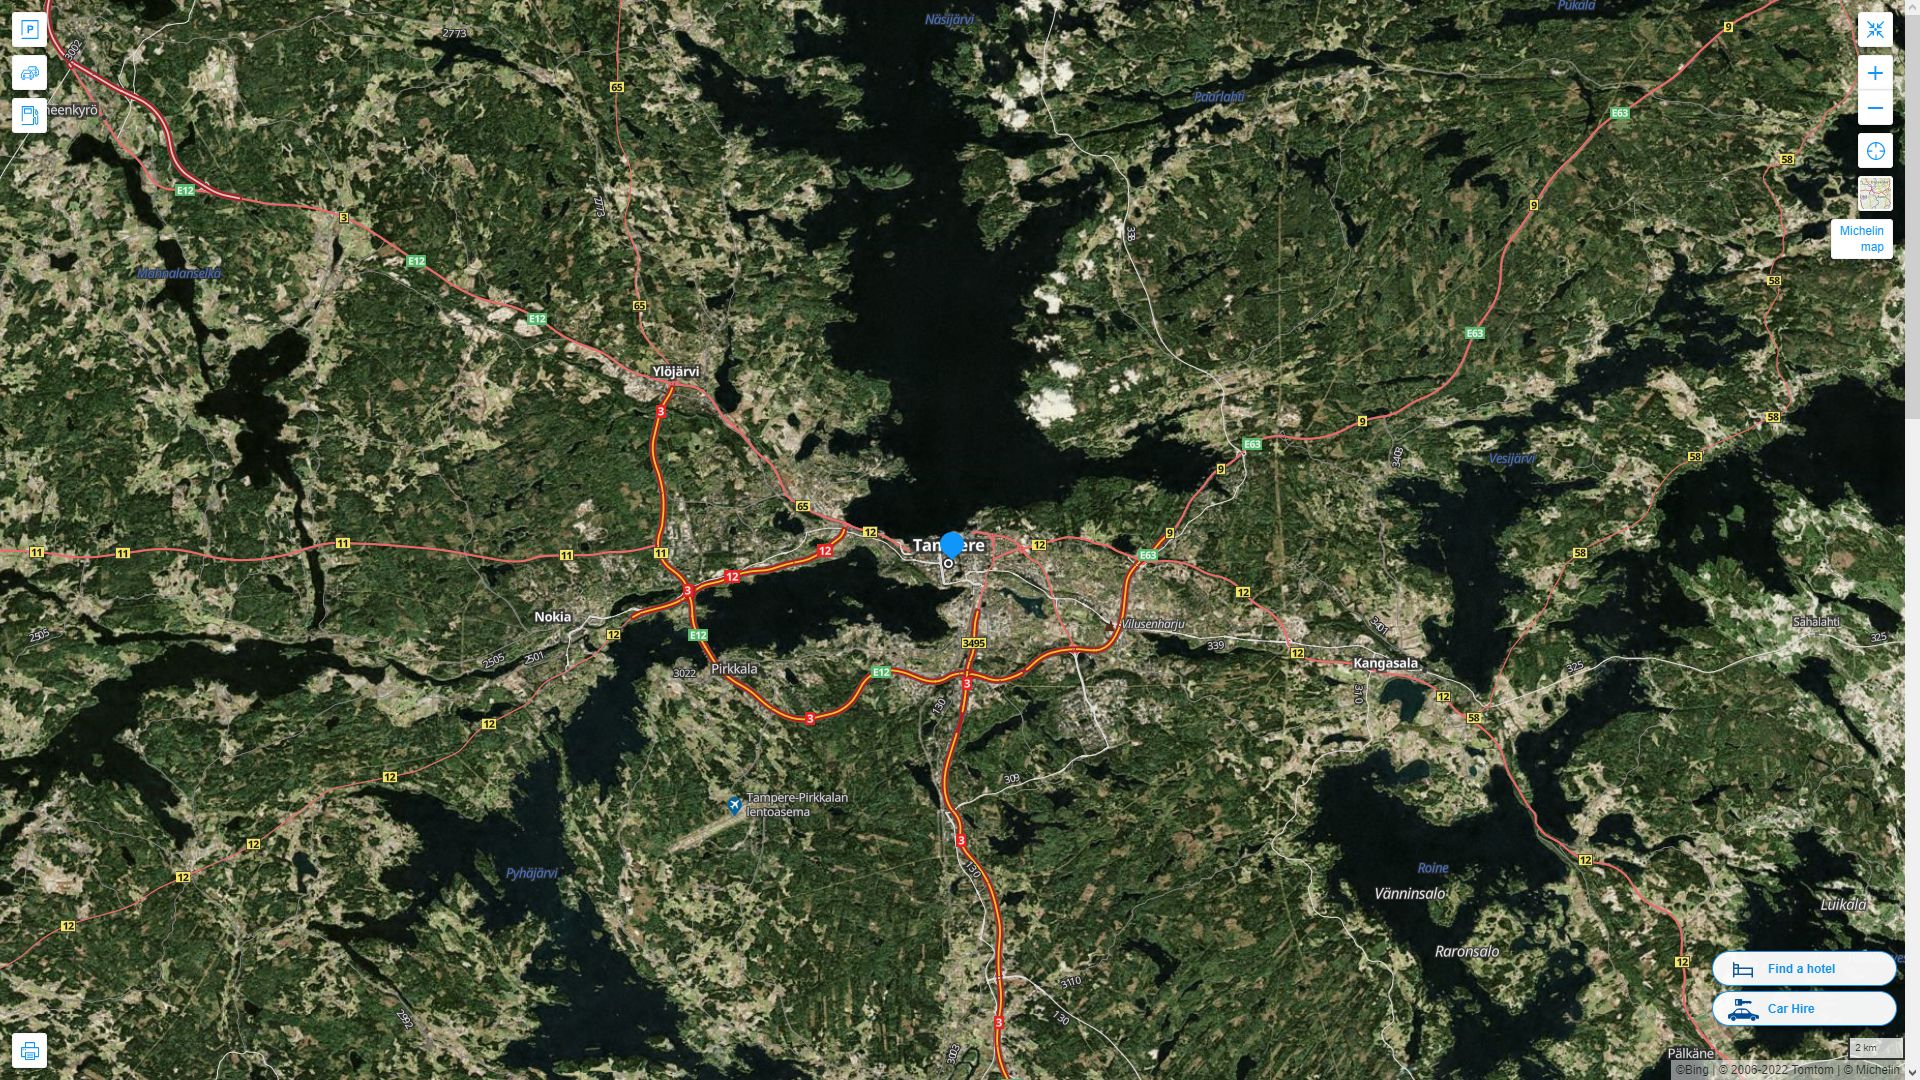 Tampere Finlande Autoroute et carte routiere avec vue satellite